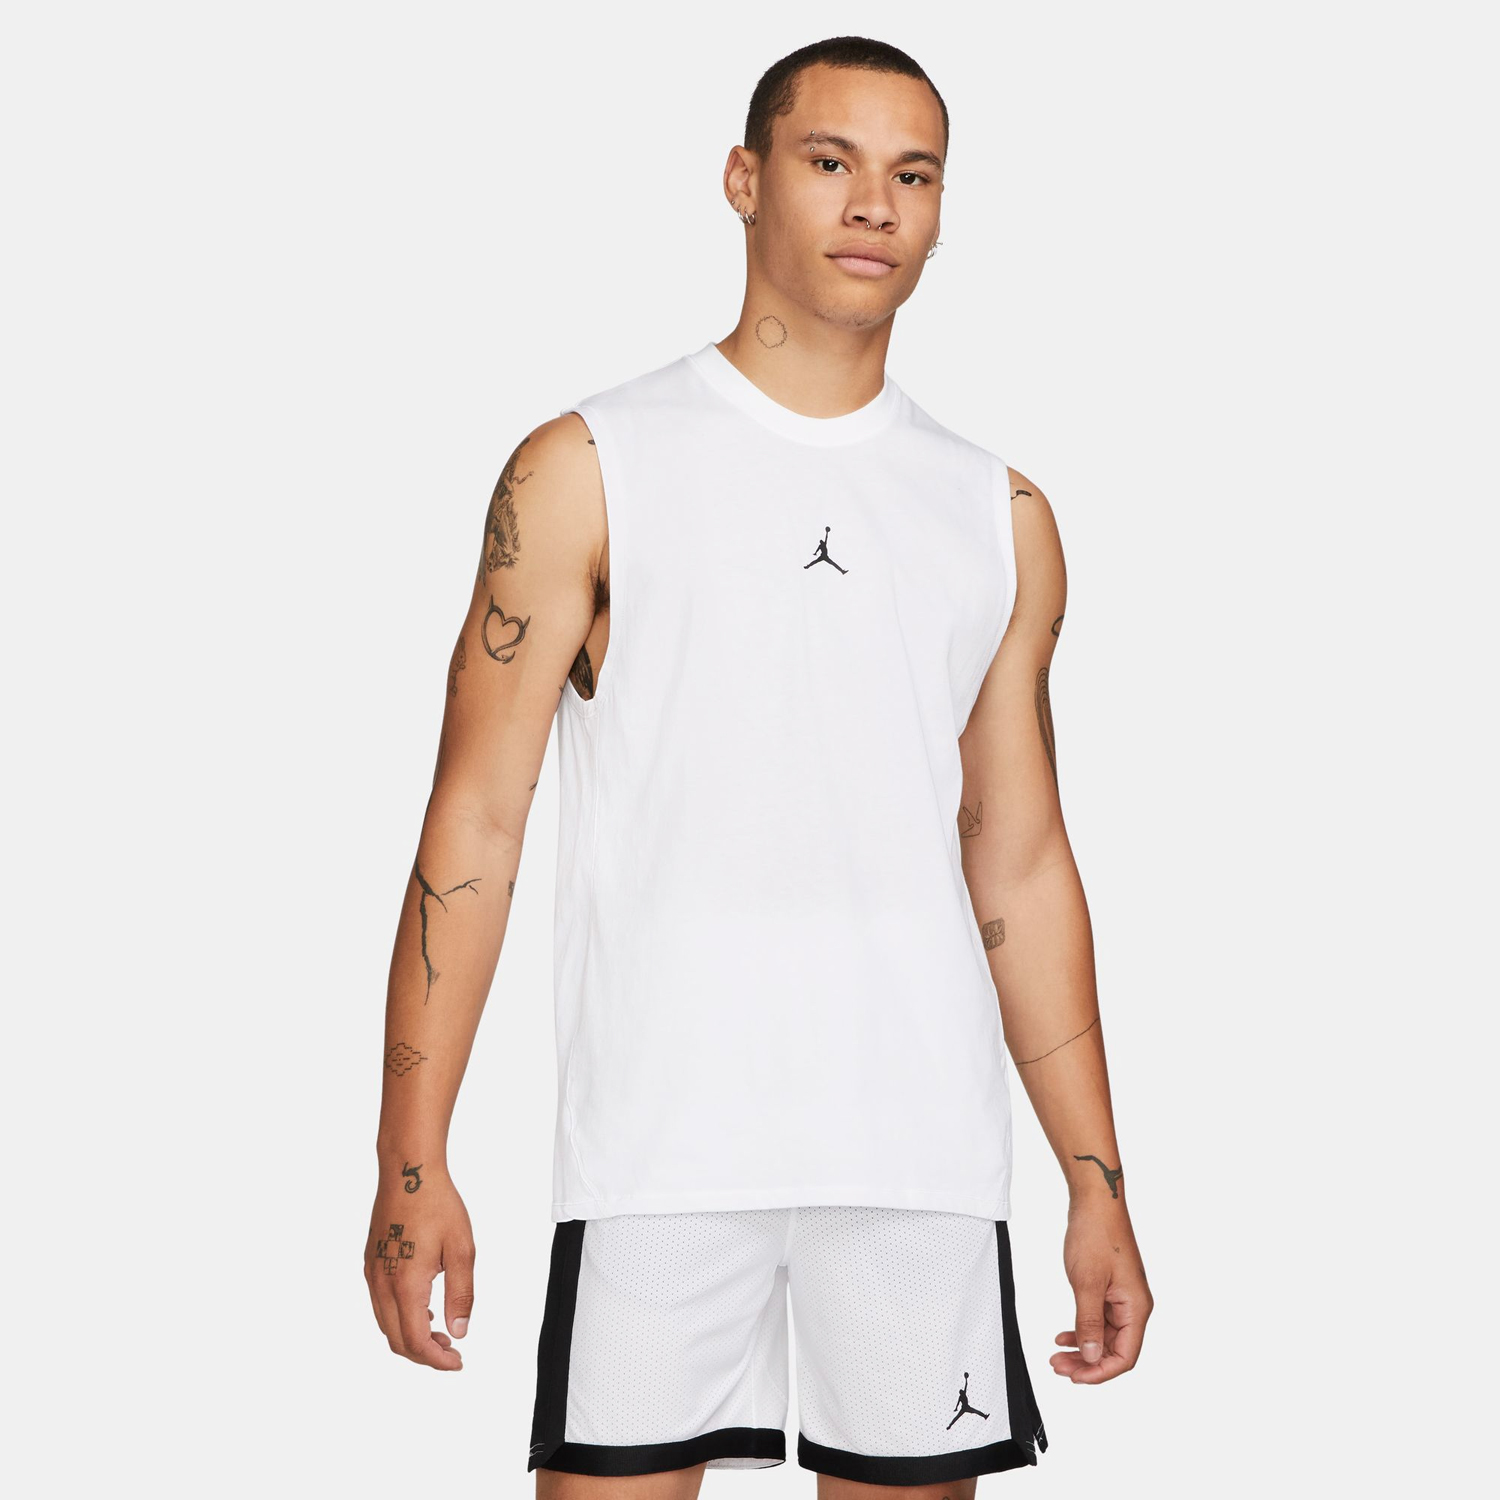 jordan-dri-fit-sport-sleeveless-top-white-black